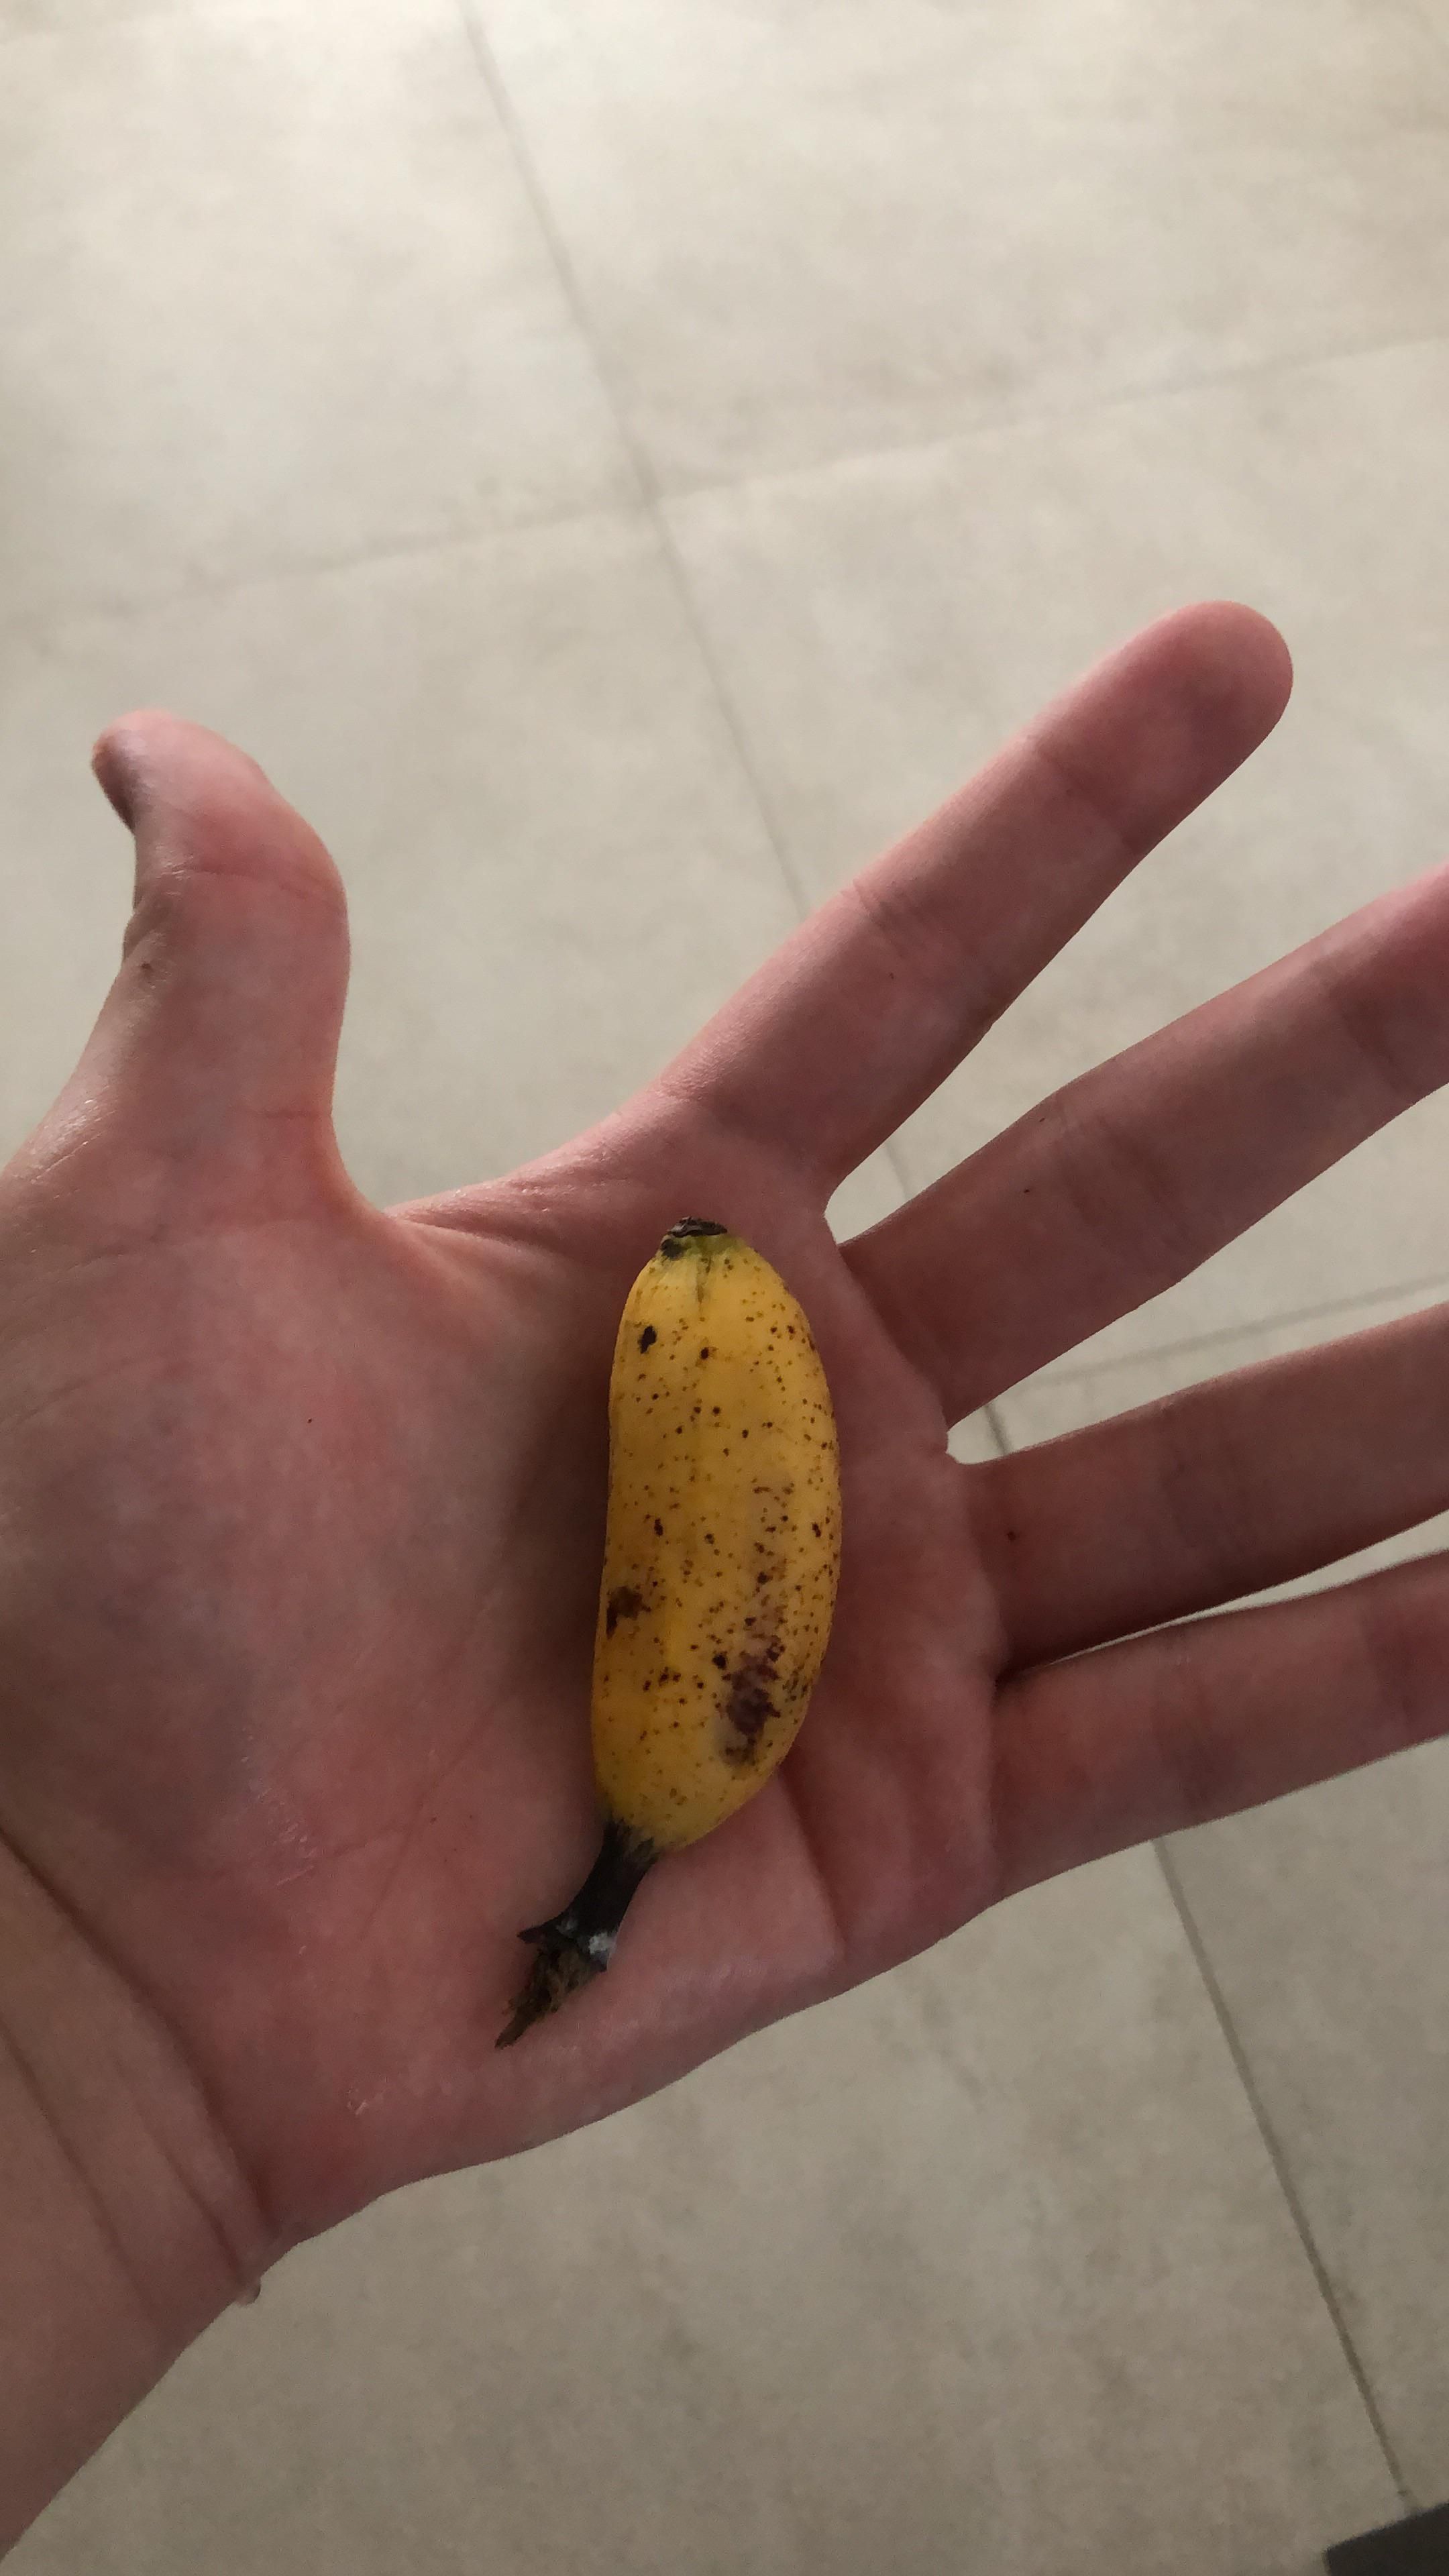 I found a 6 inch banana!